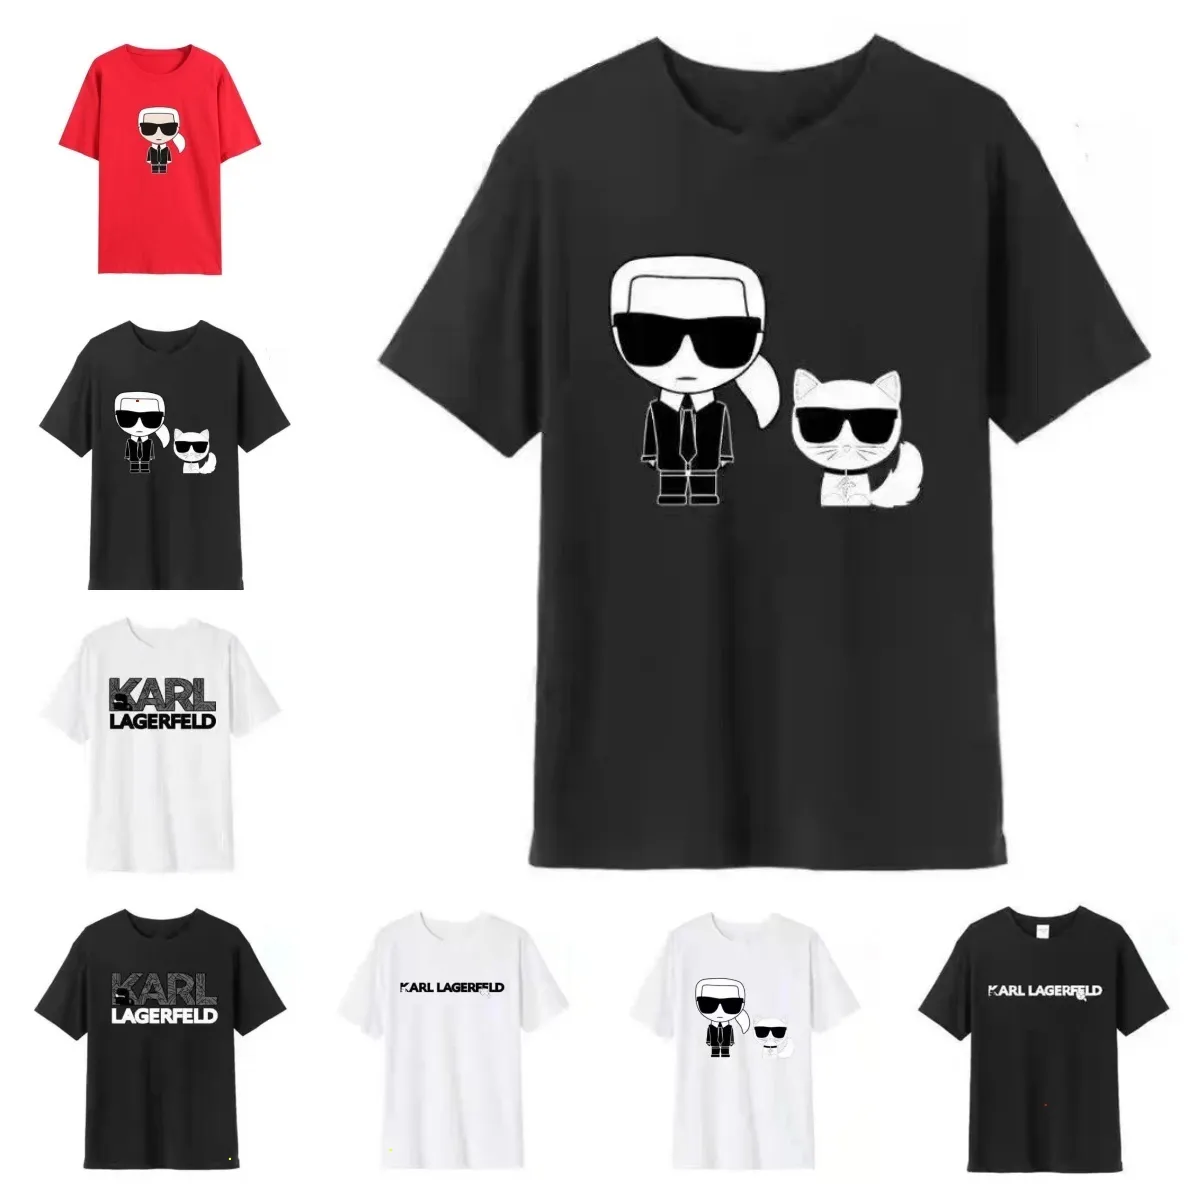 Designer Play casual masculina camisetas designers Man Tees Tops Man Tshirts Summer Summer Circt Letters Impred Men T-shirts